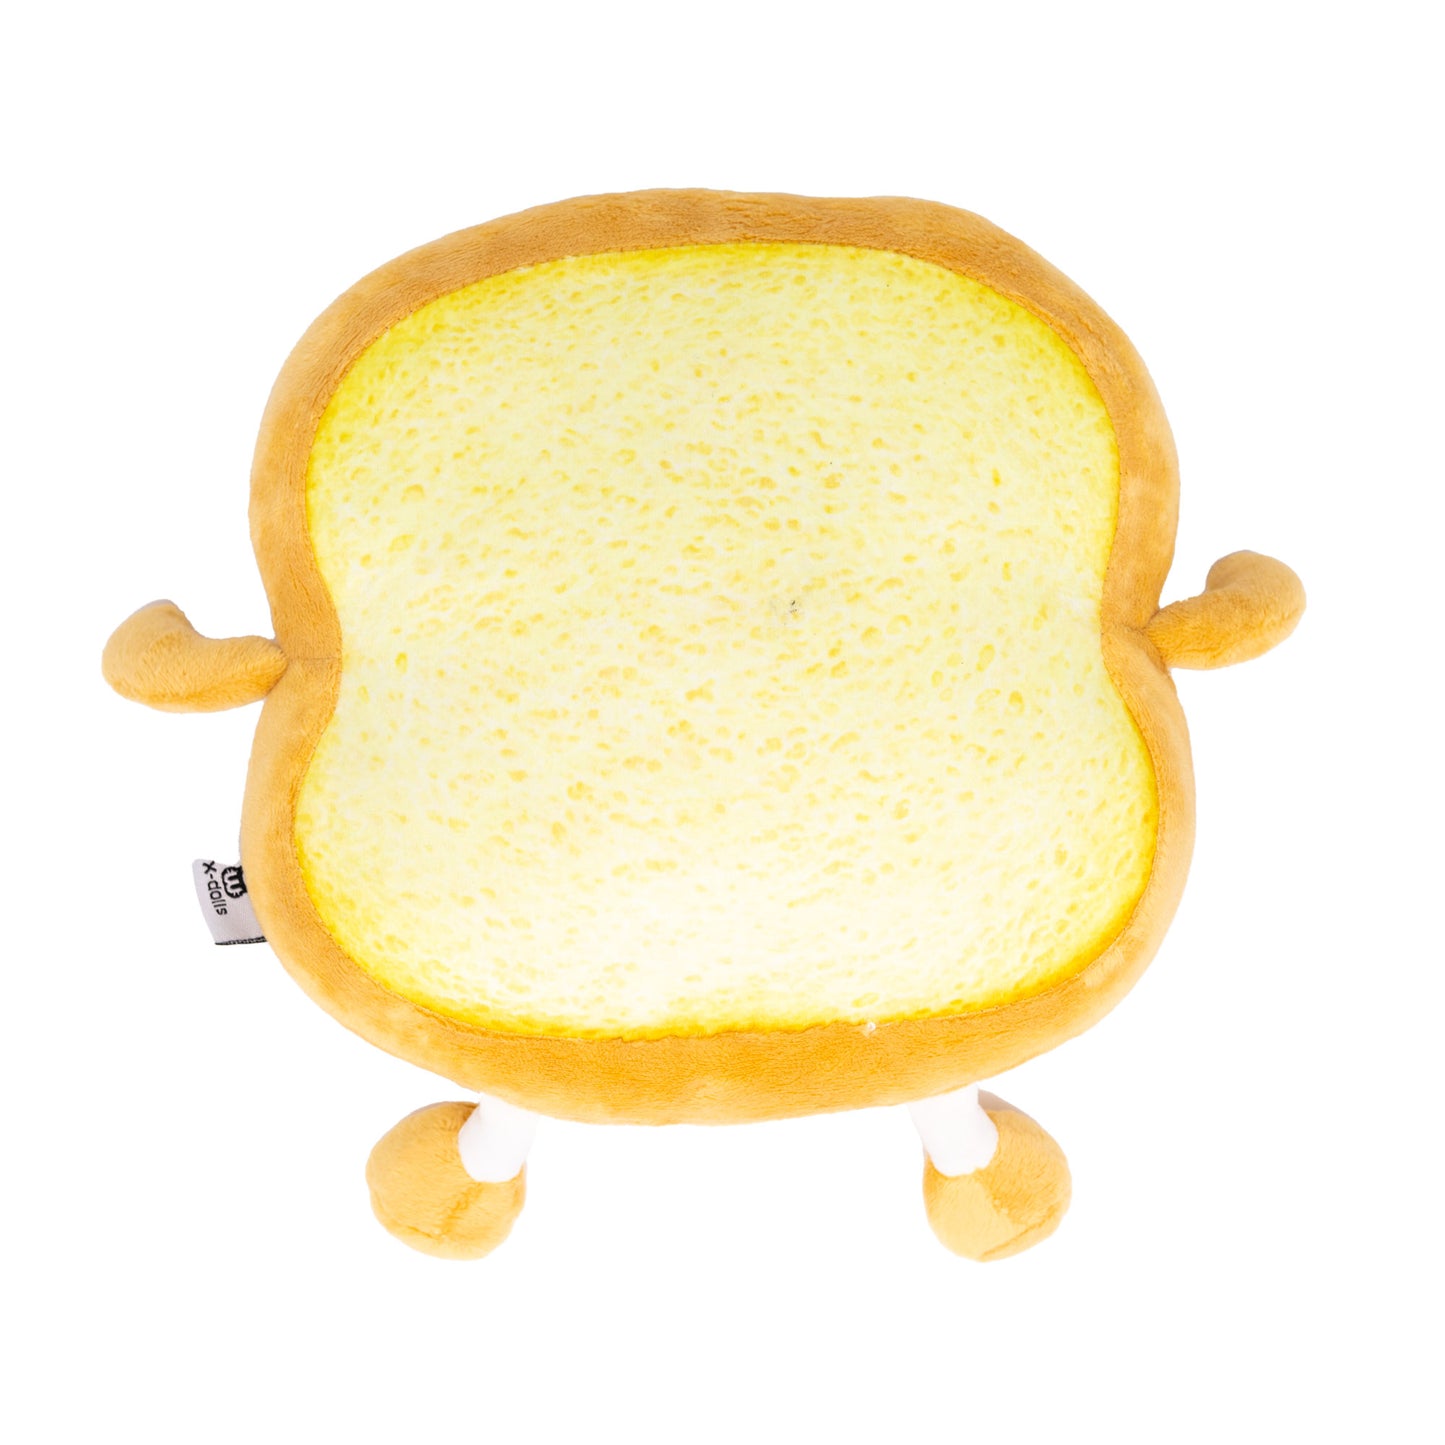 Toasty Bread Plushie